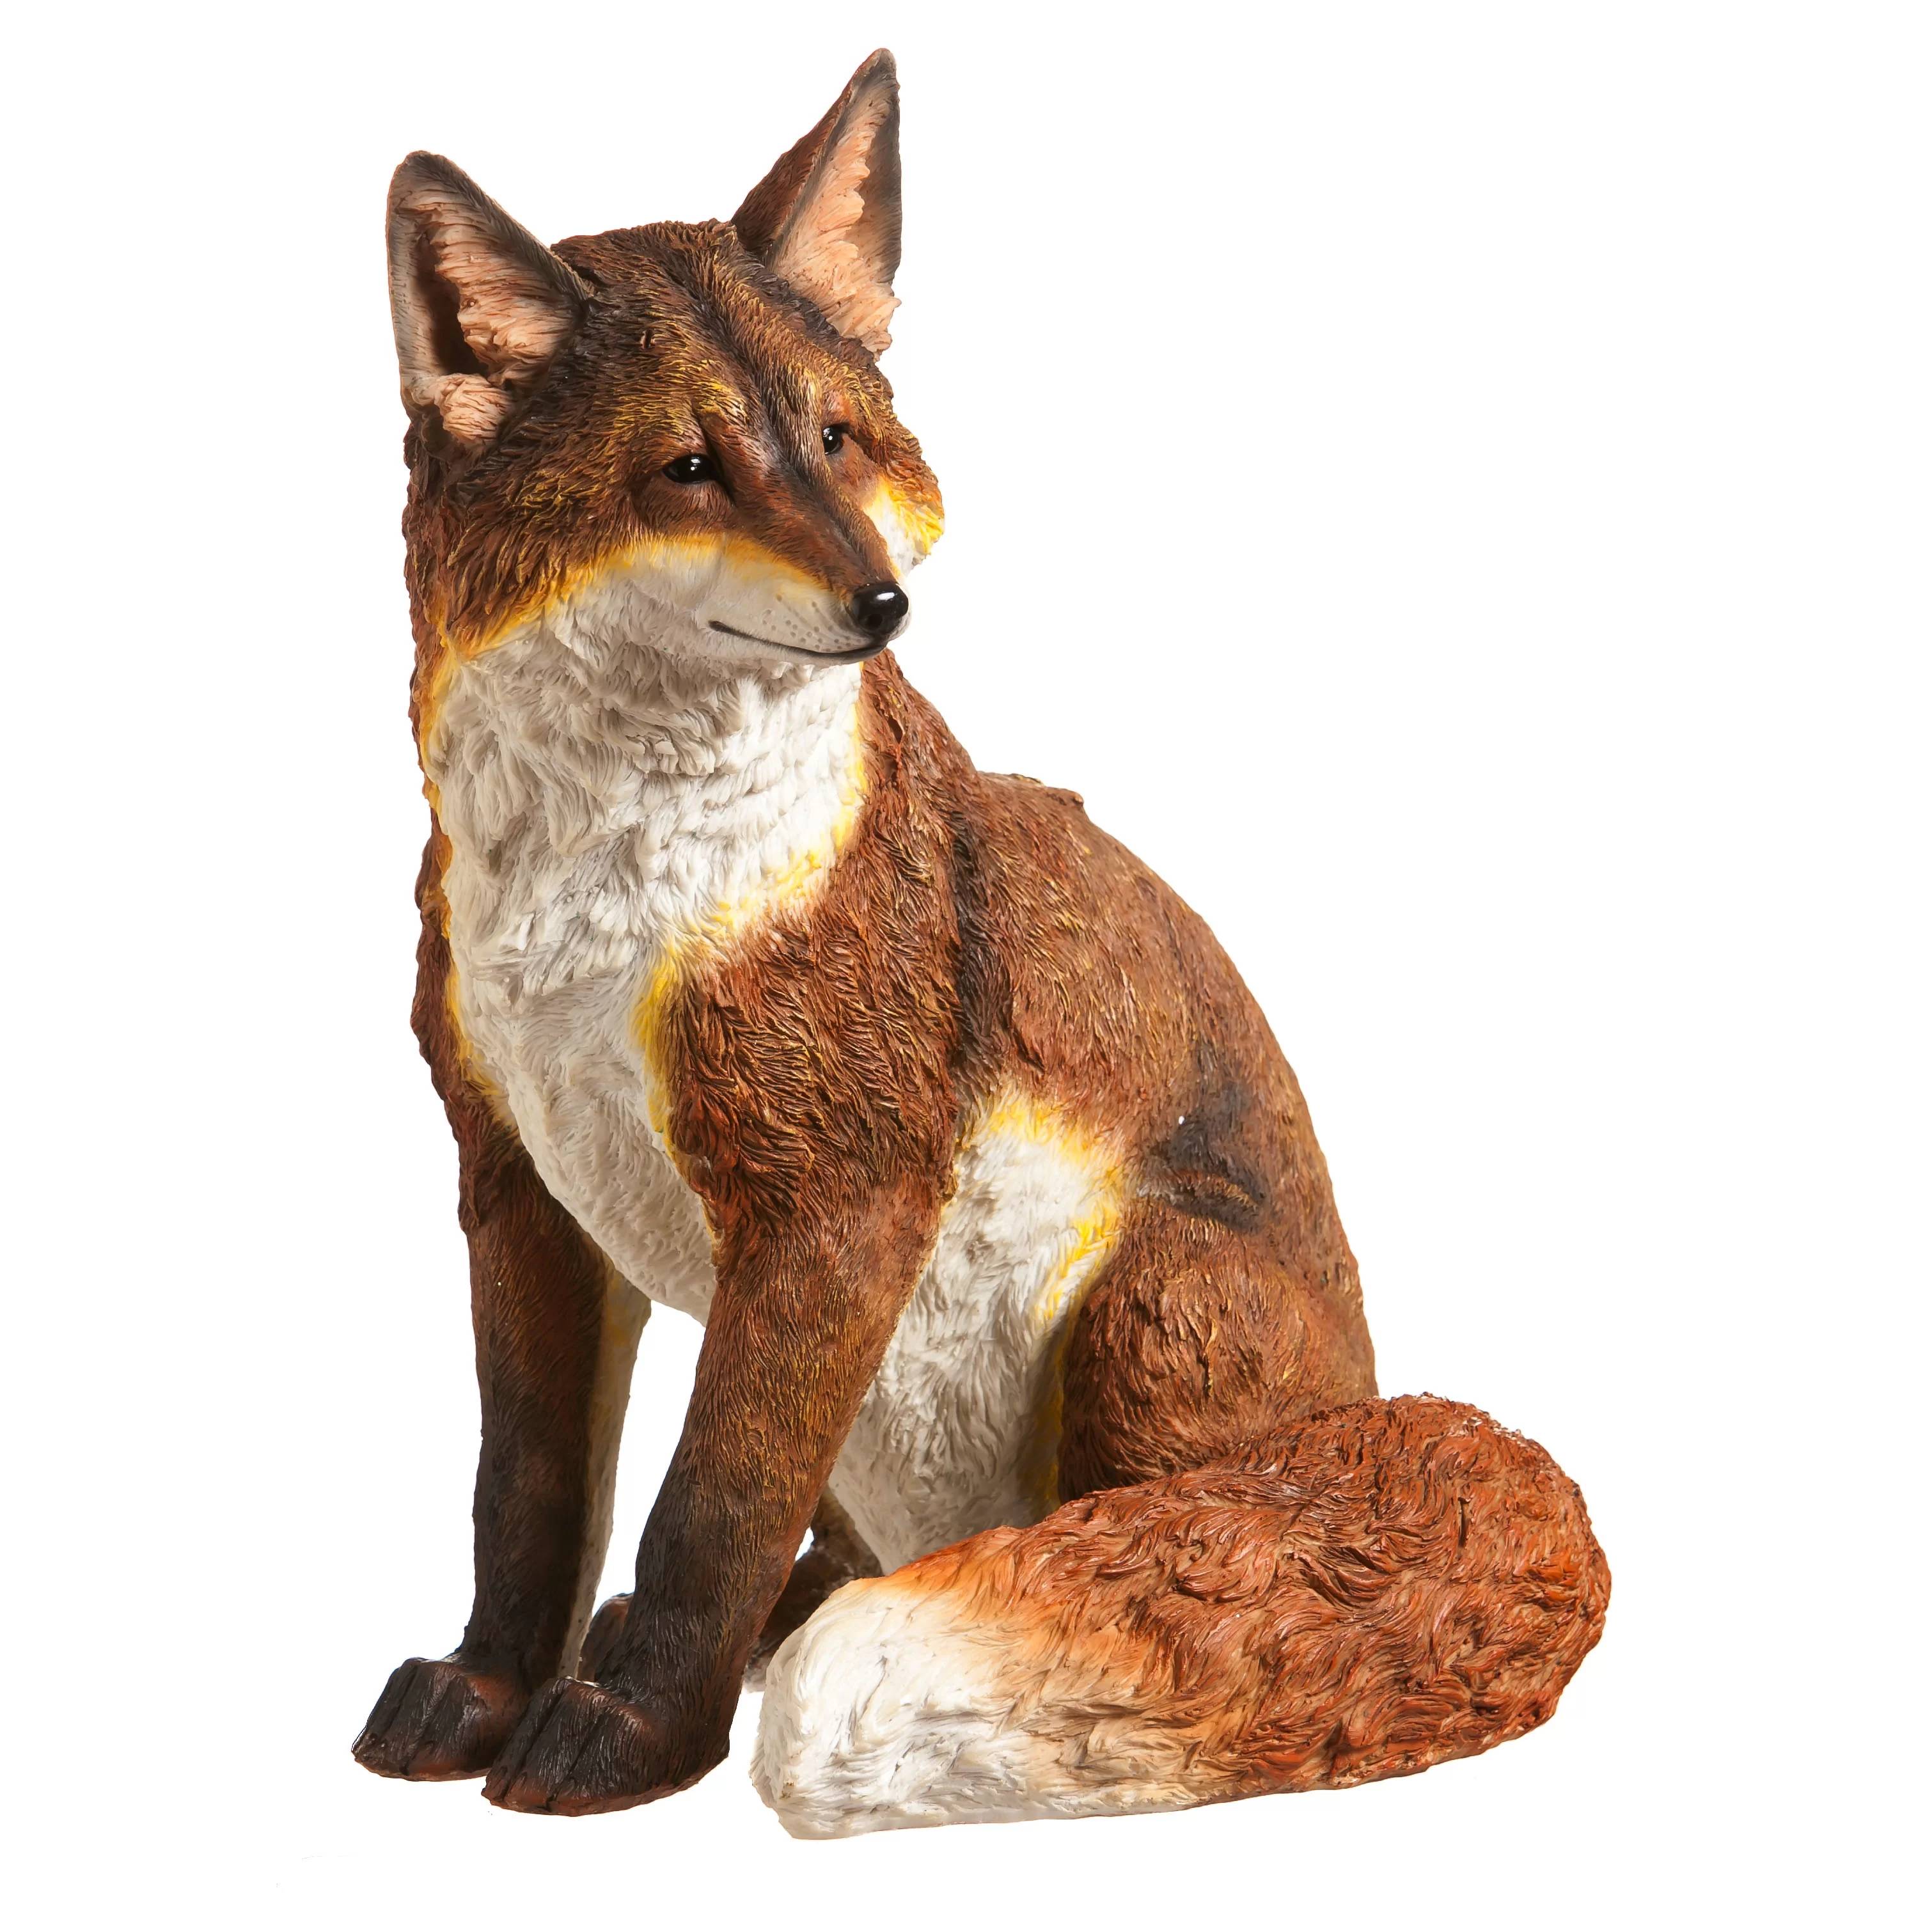 Fiberglass material sculpture park decoration life-size resin fox garden statue for sale Featured Image